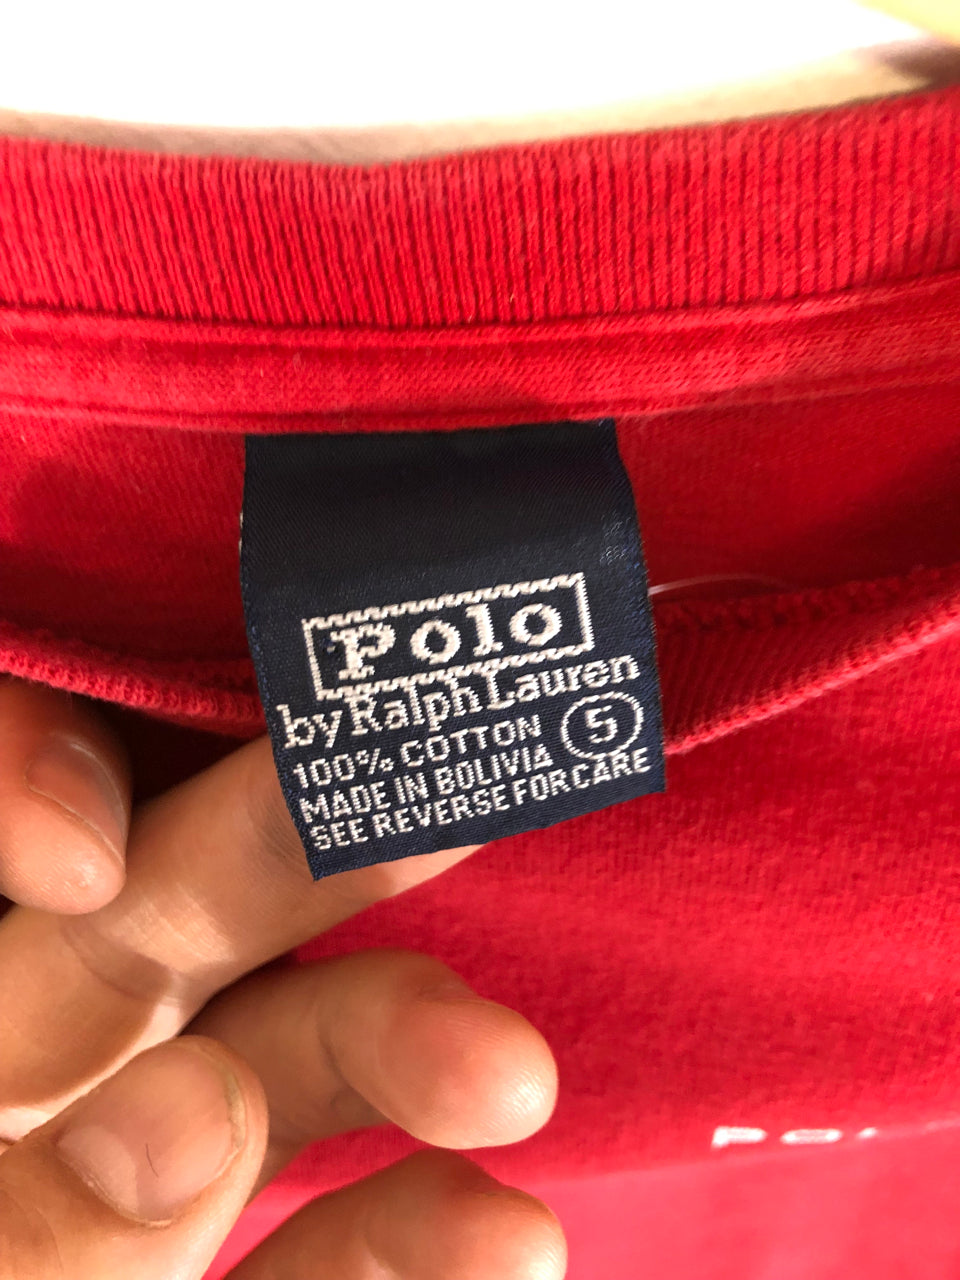 Kids' Polo Sport Long-Sleeved Top